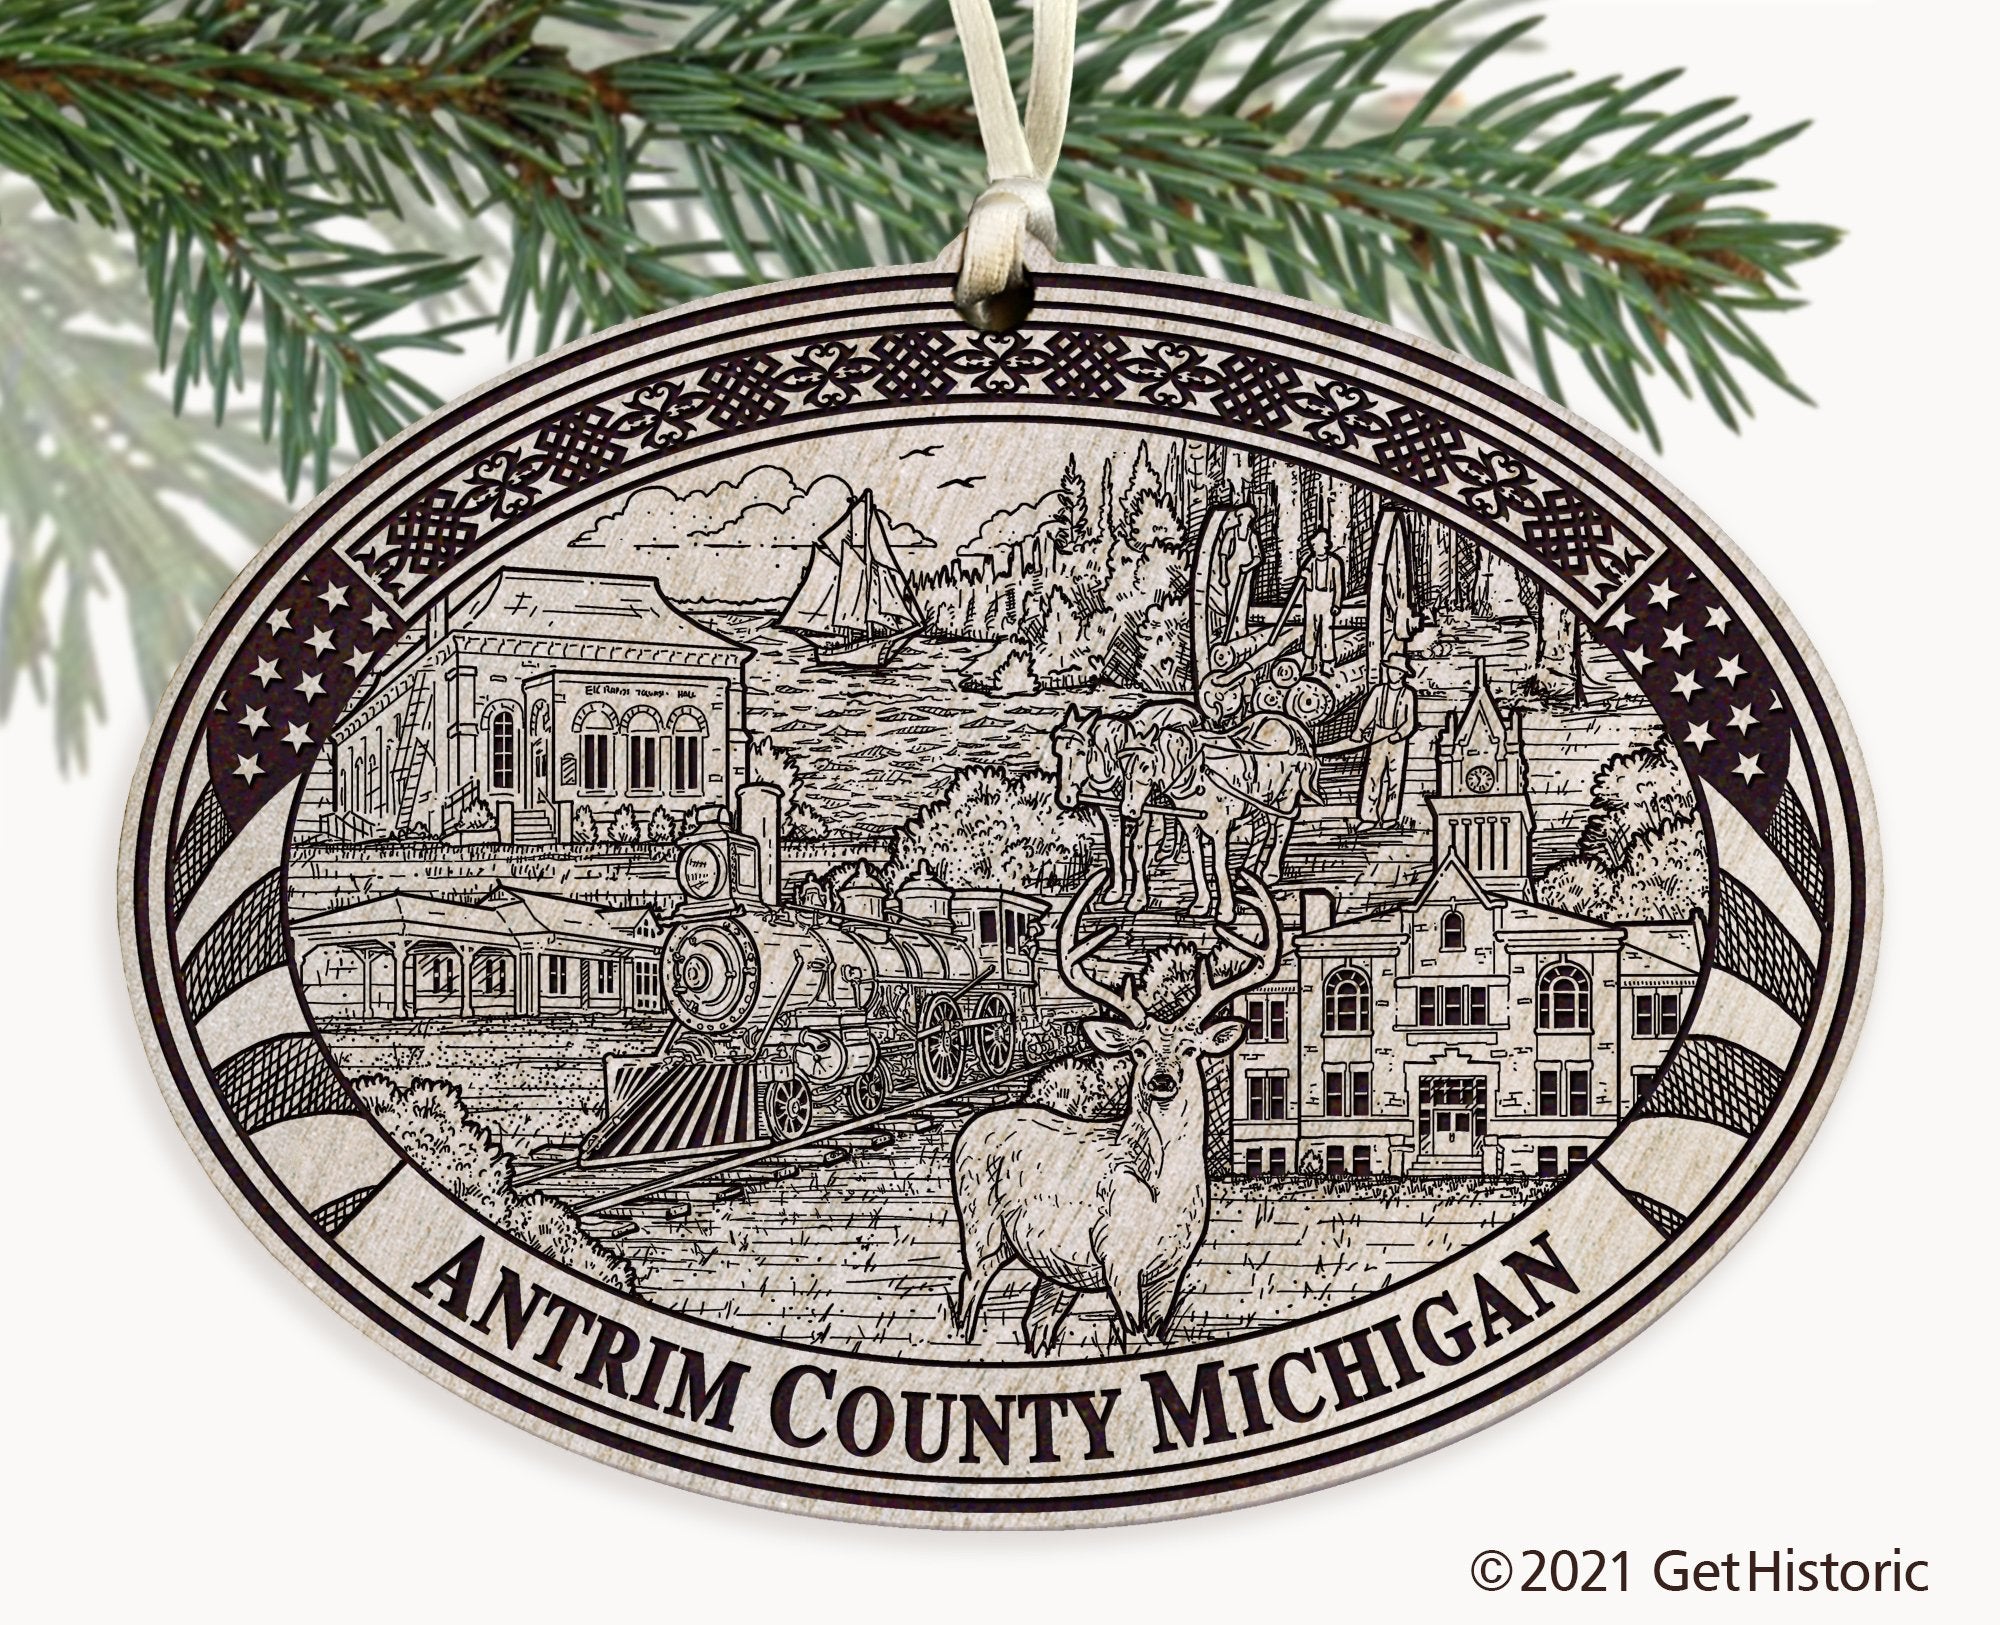 Antrim County Michigan Engraved Ornament